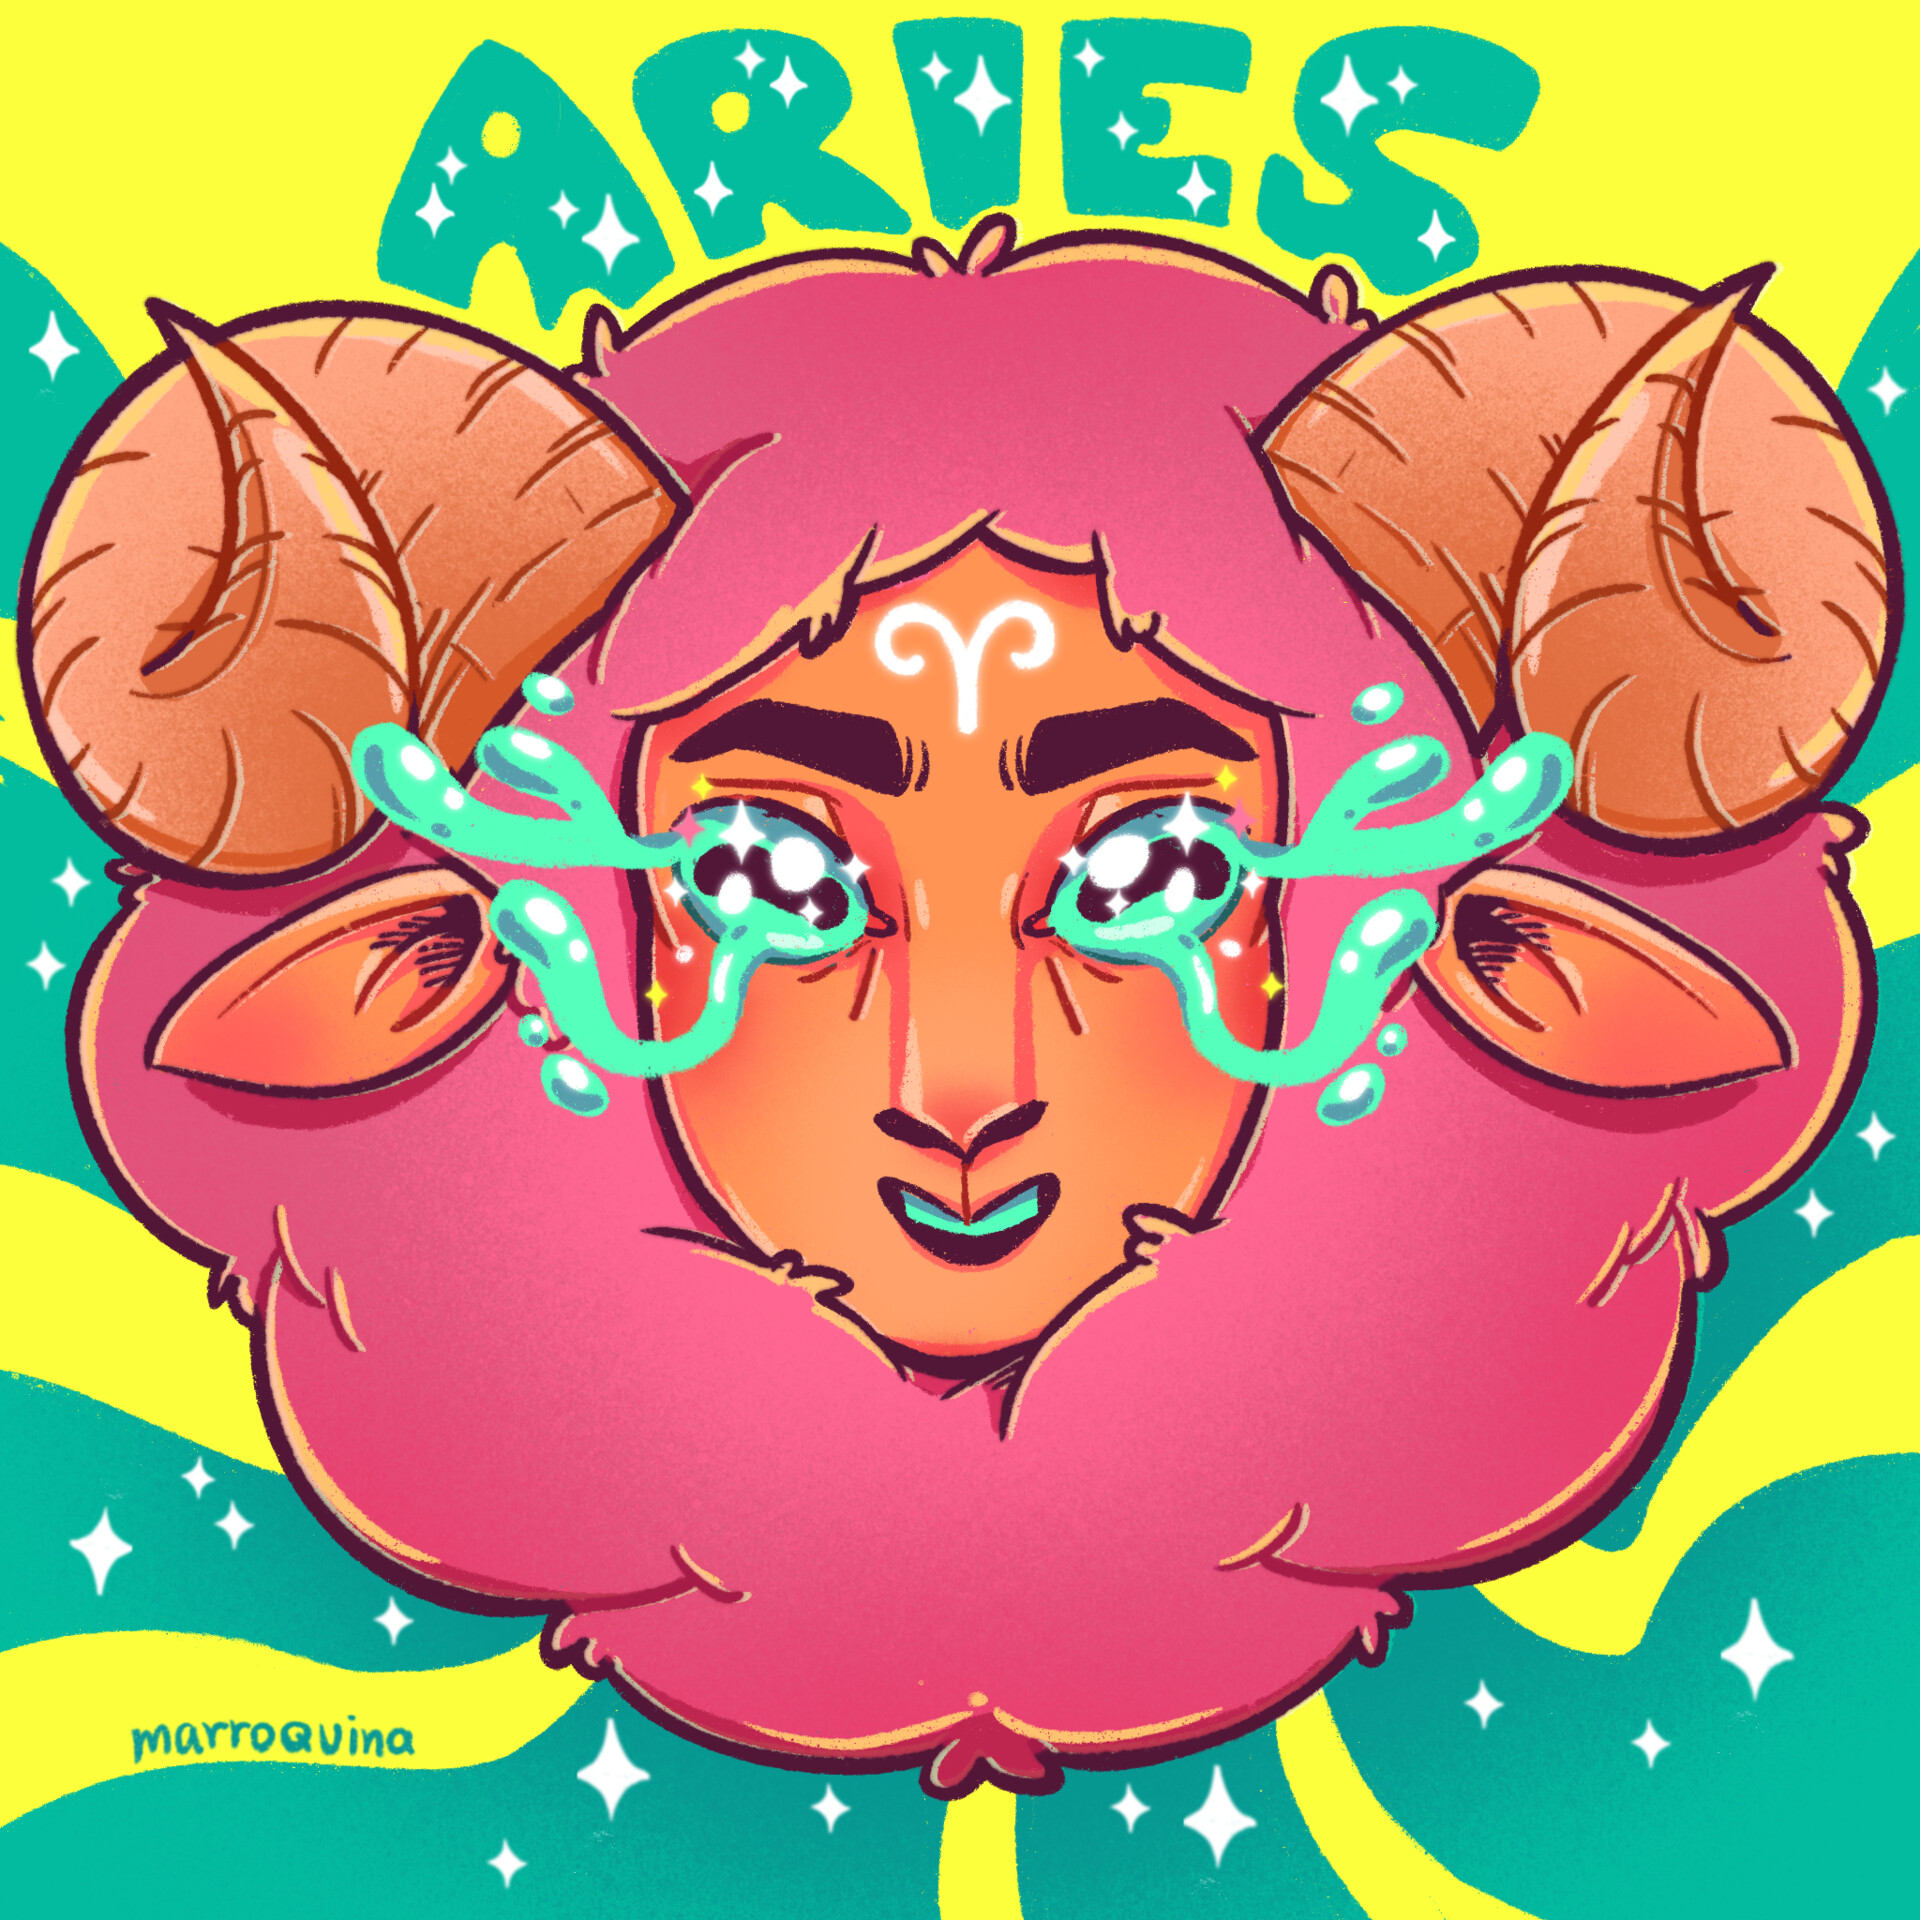 ArtStation - Aries